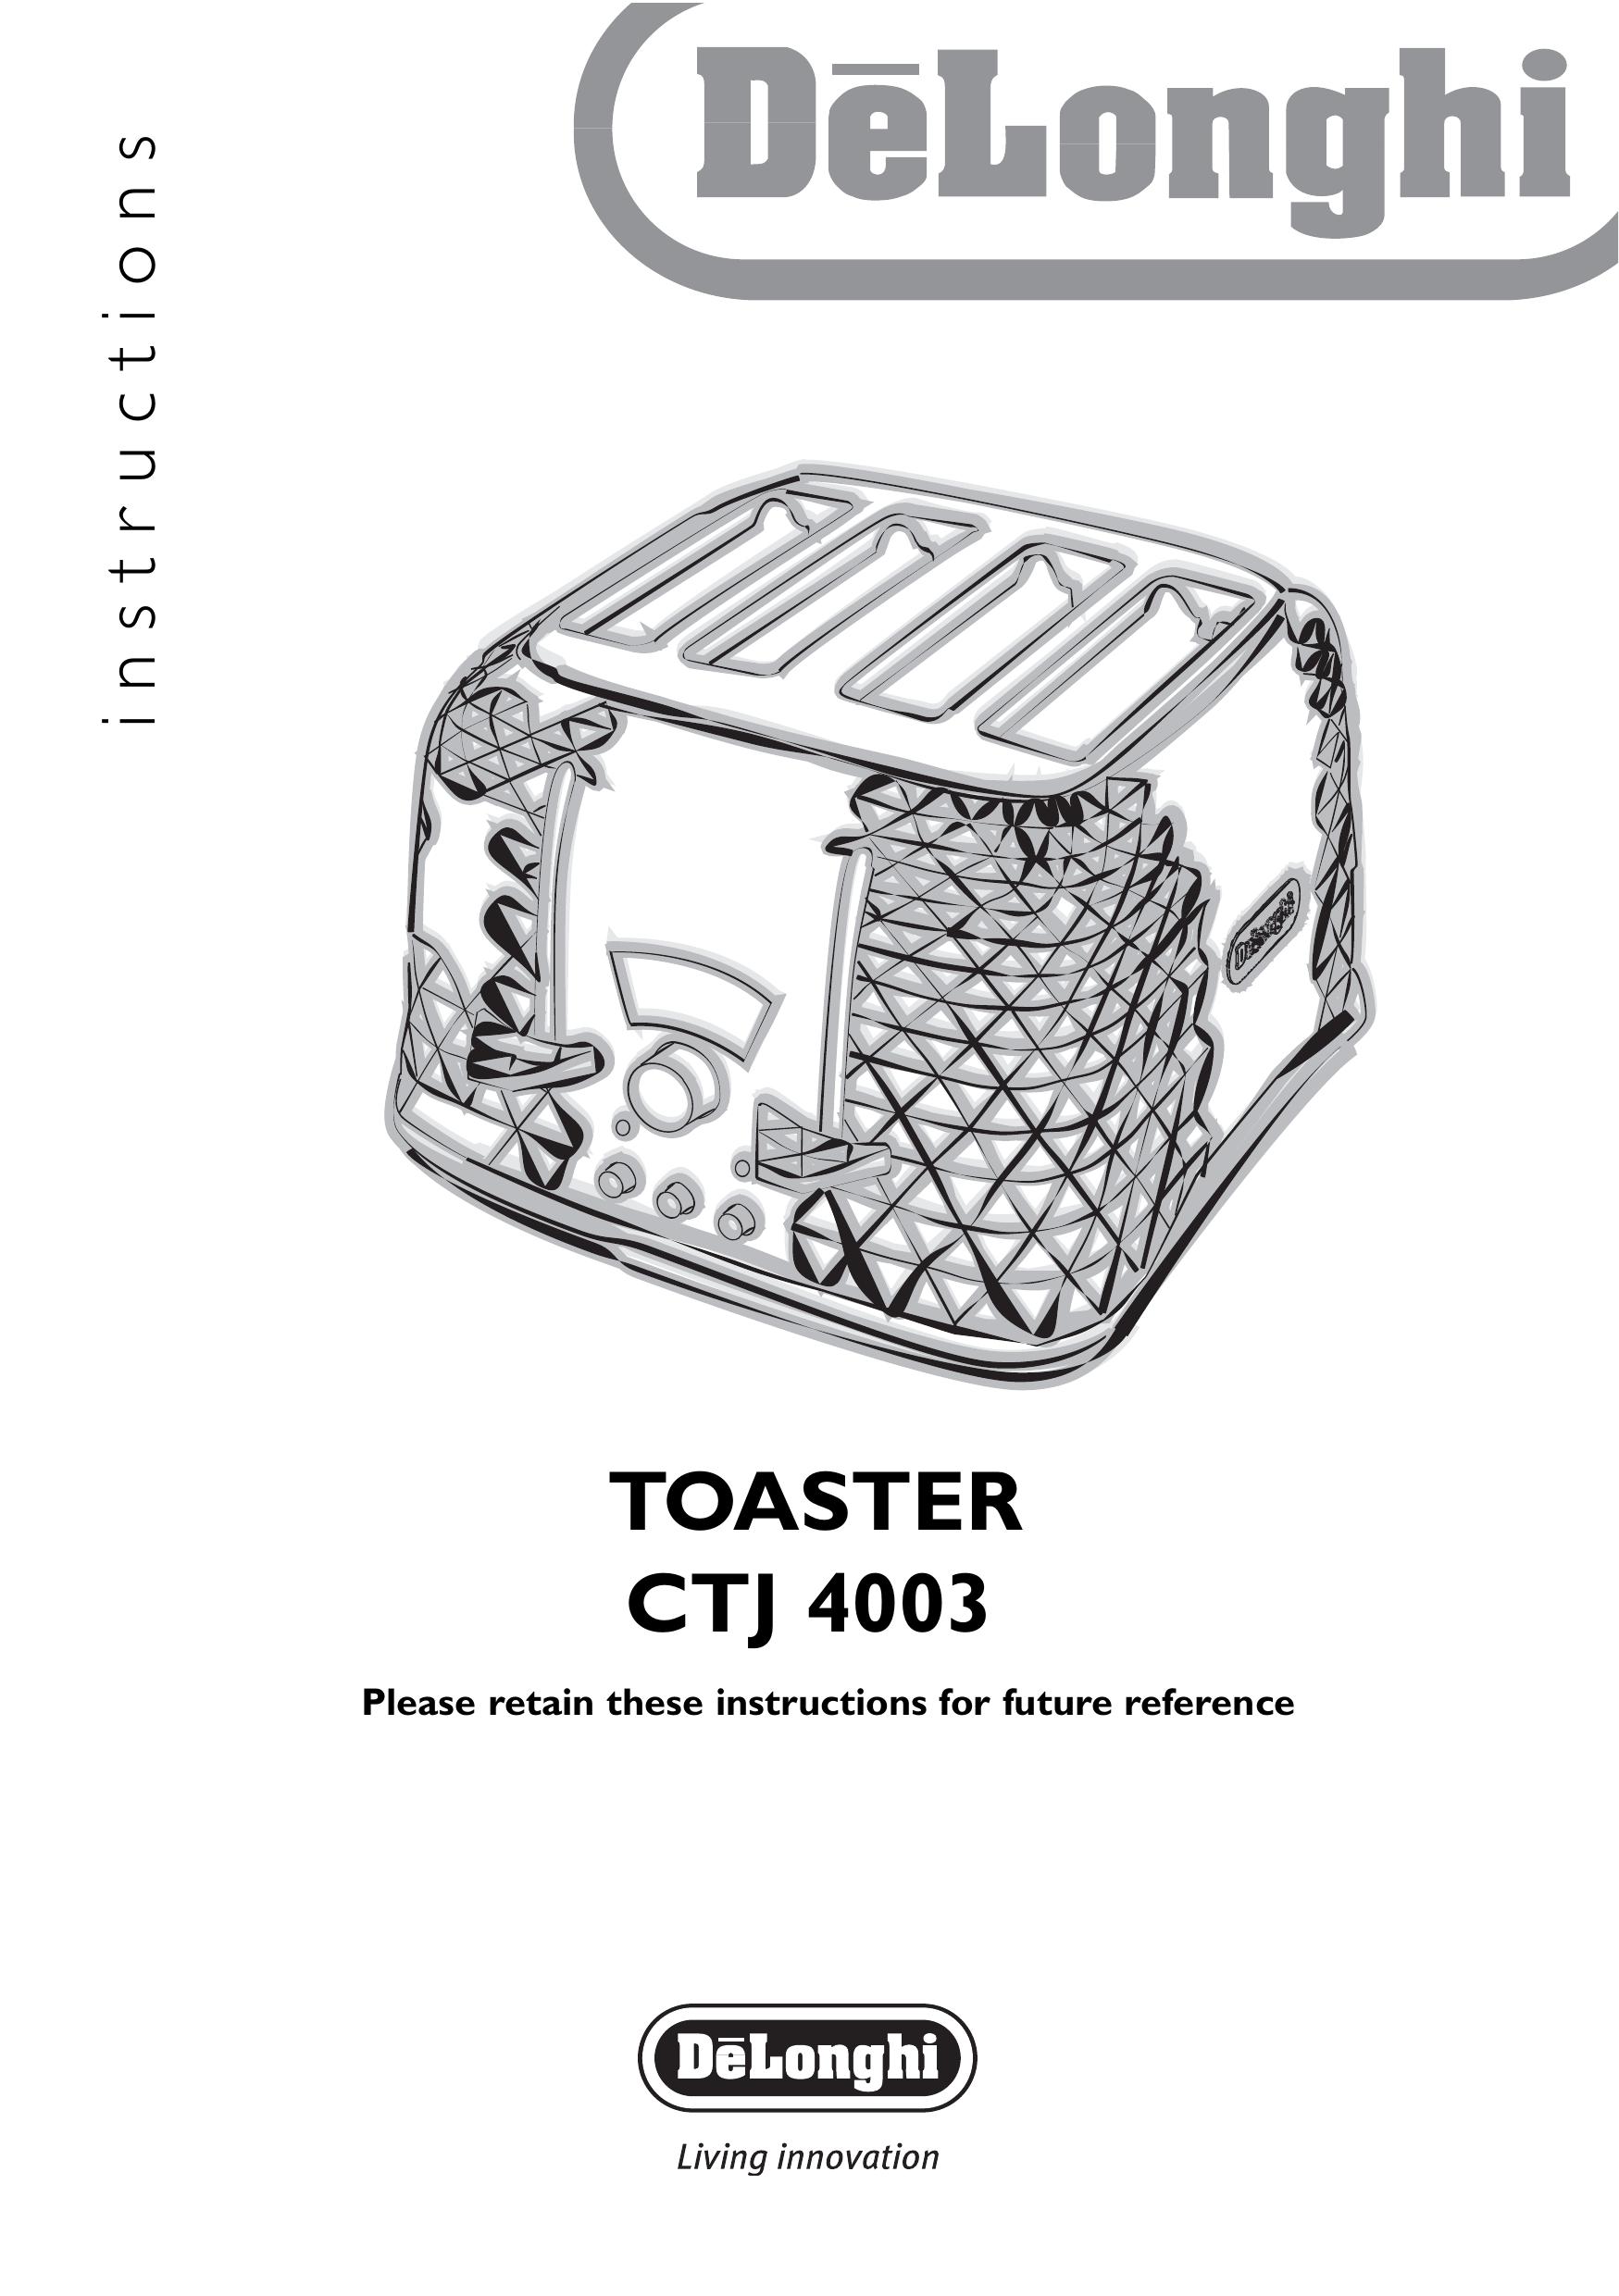 DeLonghi CTJ 4003 Toaster User Manual